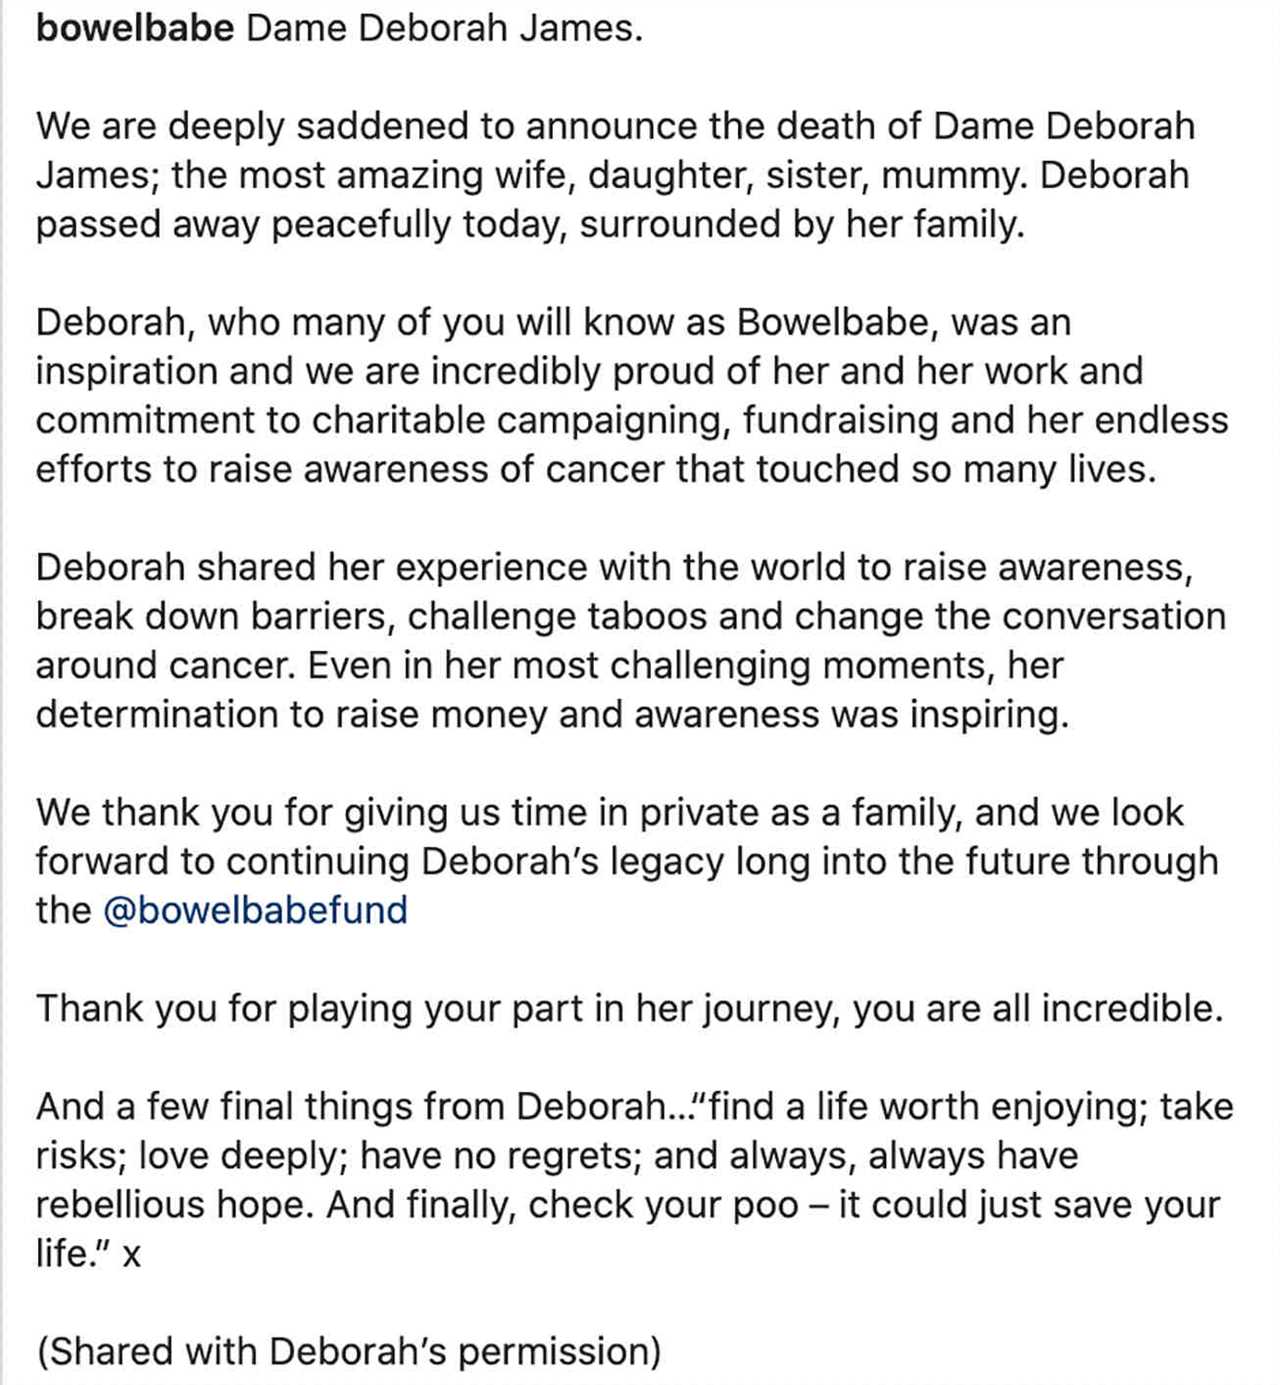 Deborah James dead: Her devastated family’s Instagram statement in full